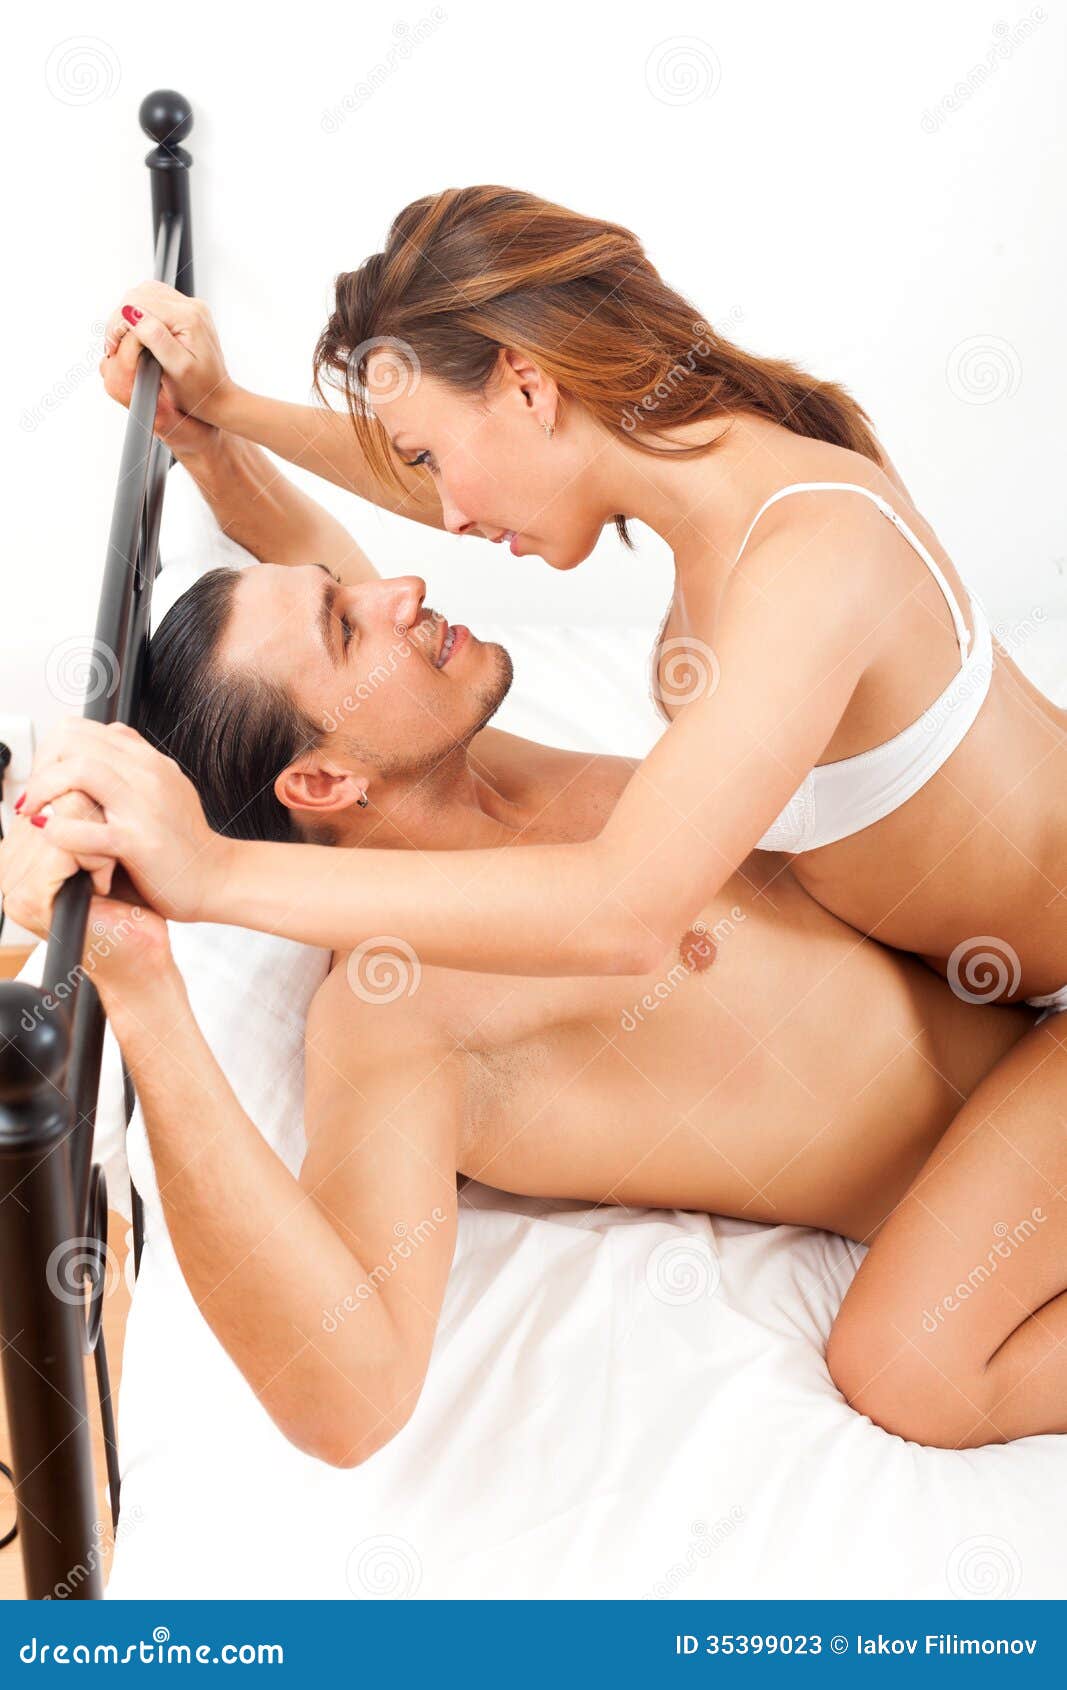 Italian Woman Having Sex And Massage 33